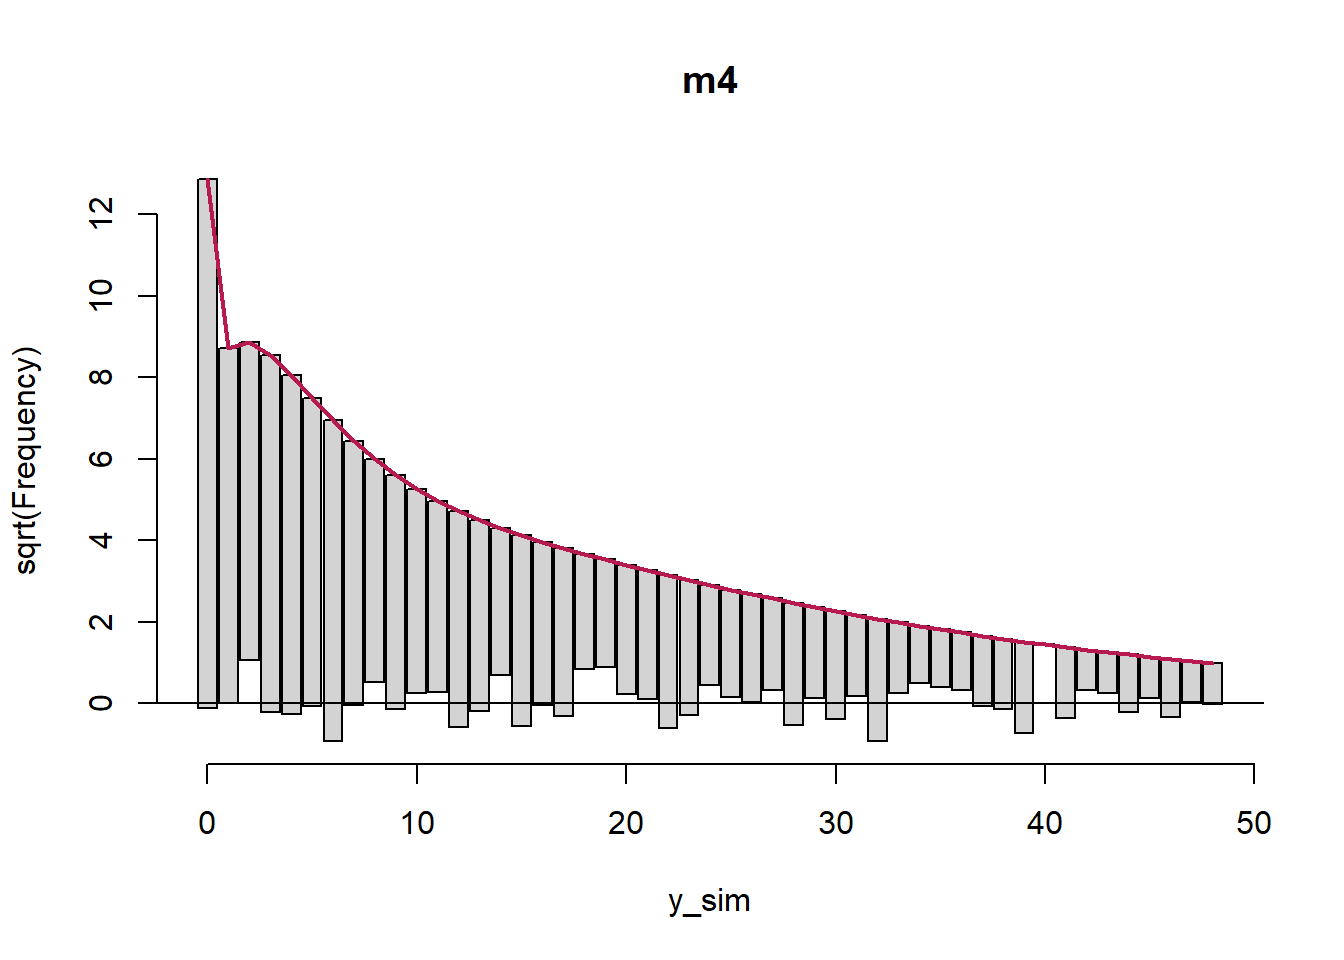 rootogram of model m4.